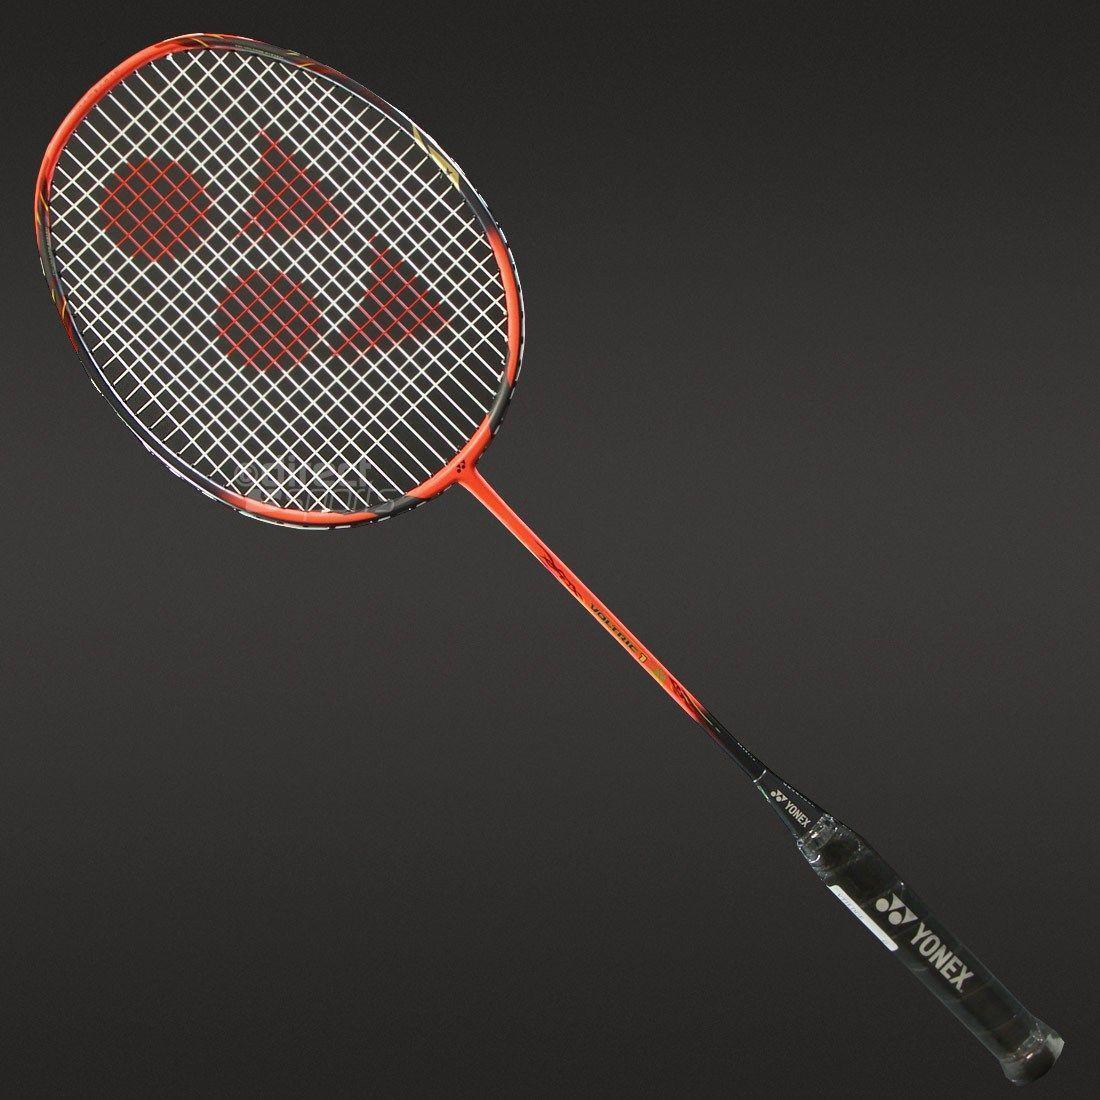 lin dan badminton racket wallpaper Wallppapers Gallery